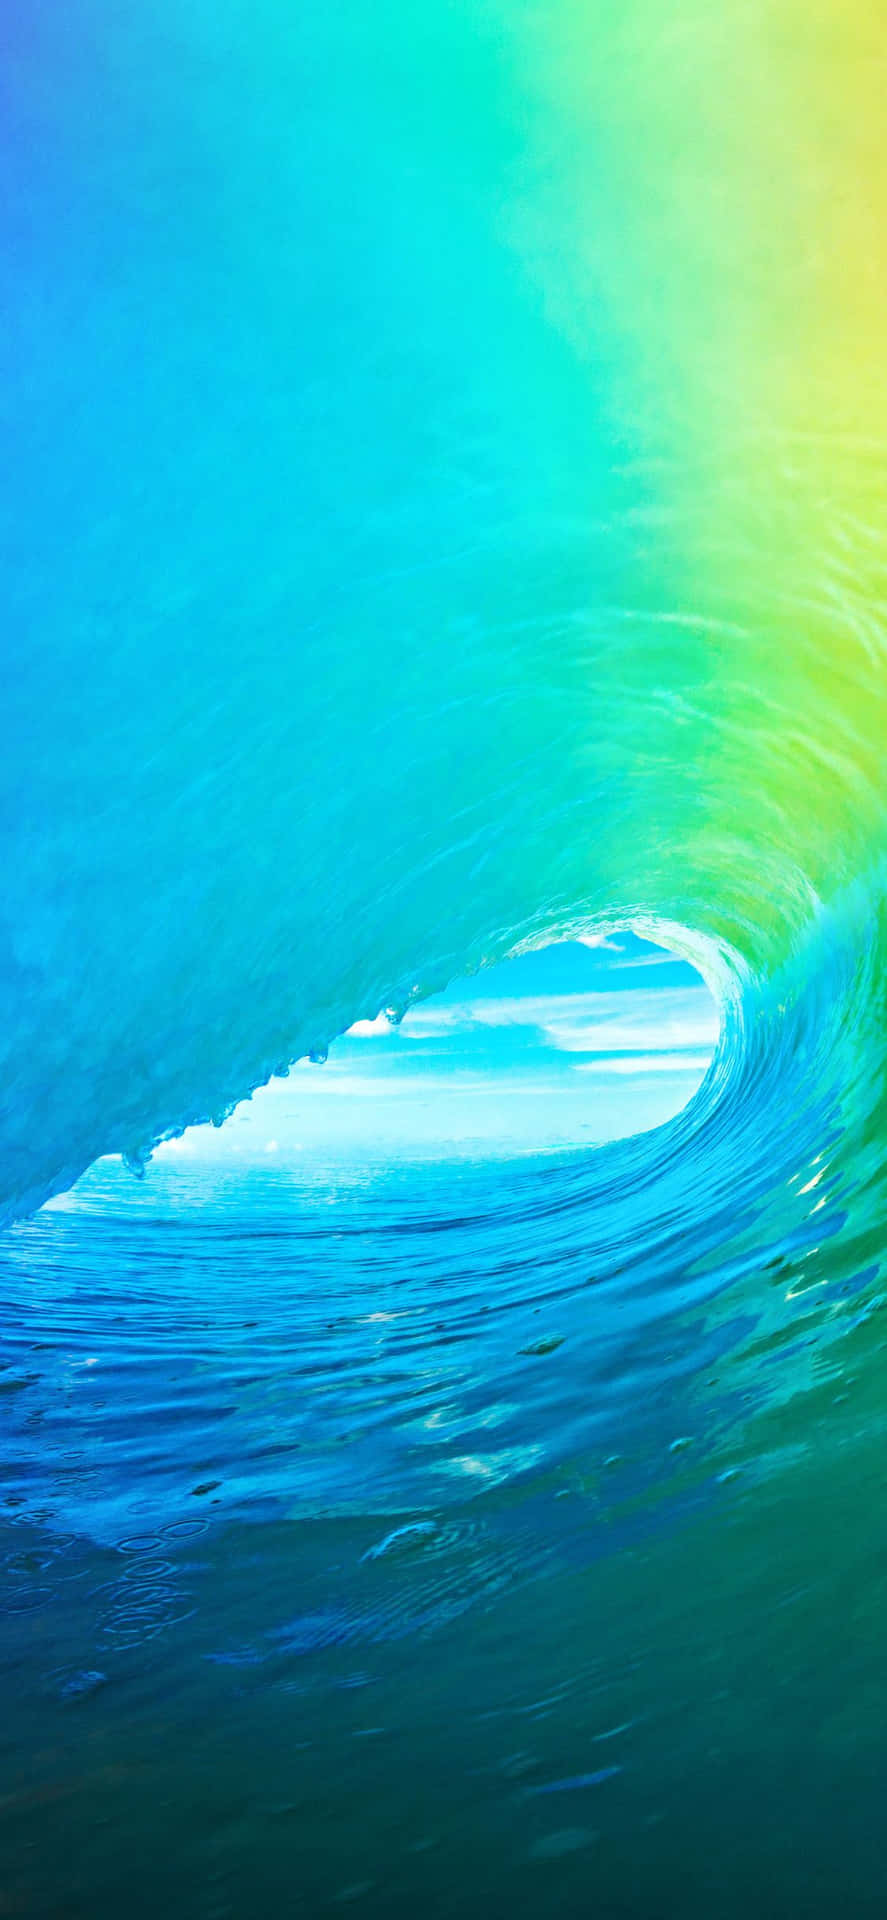 Original Iphone 5s Colorful Wave Wallpaper